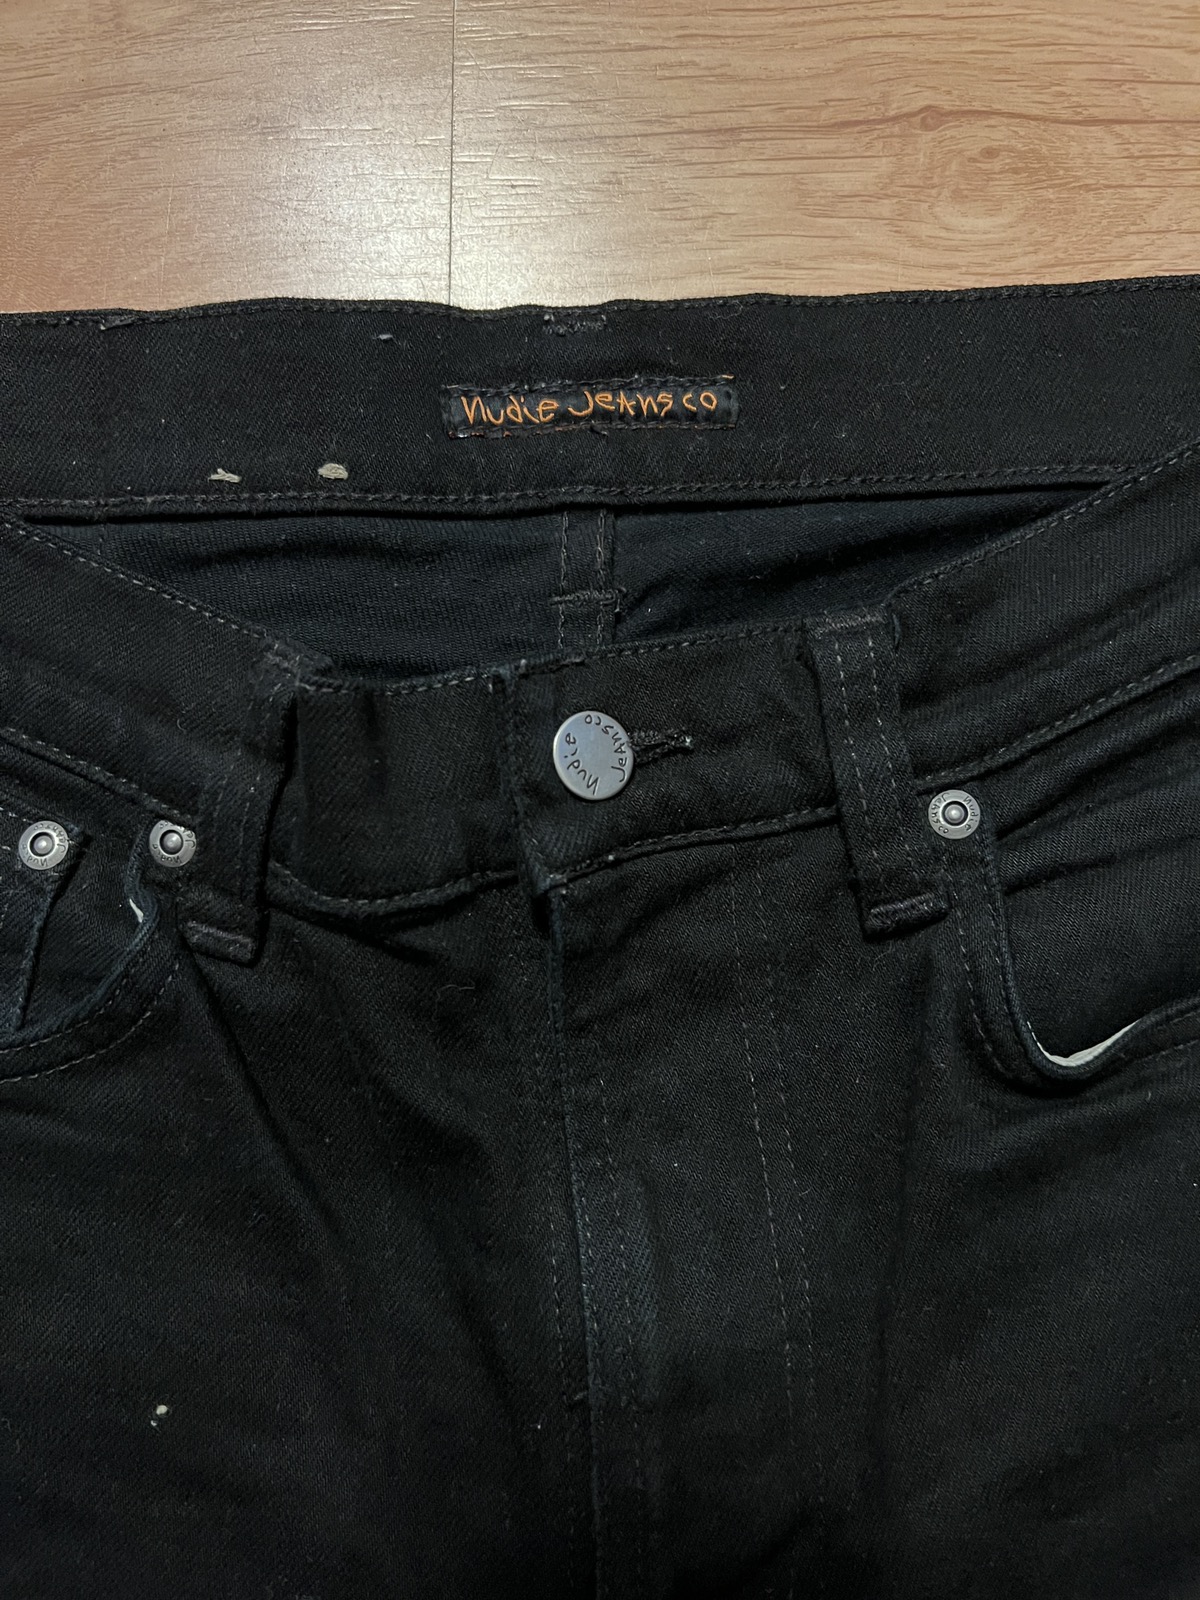 Jeans Nudie Jeans co Denim organic cotton vintage - 6